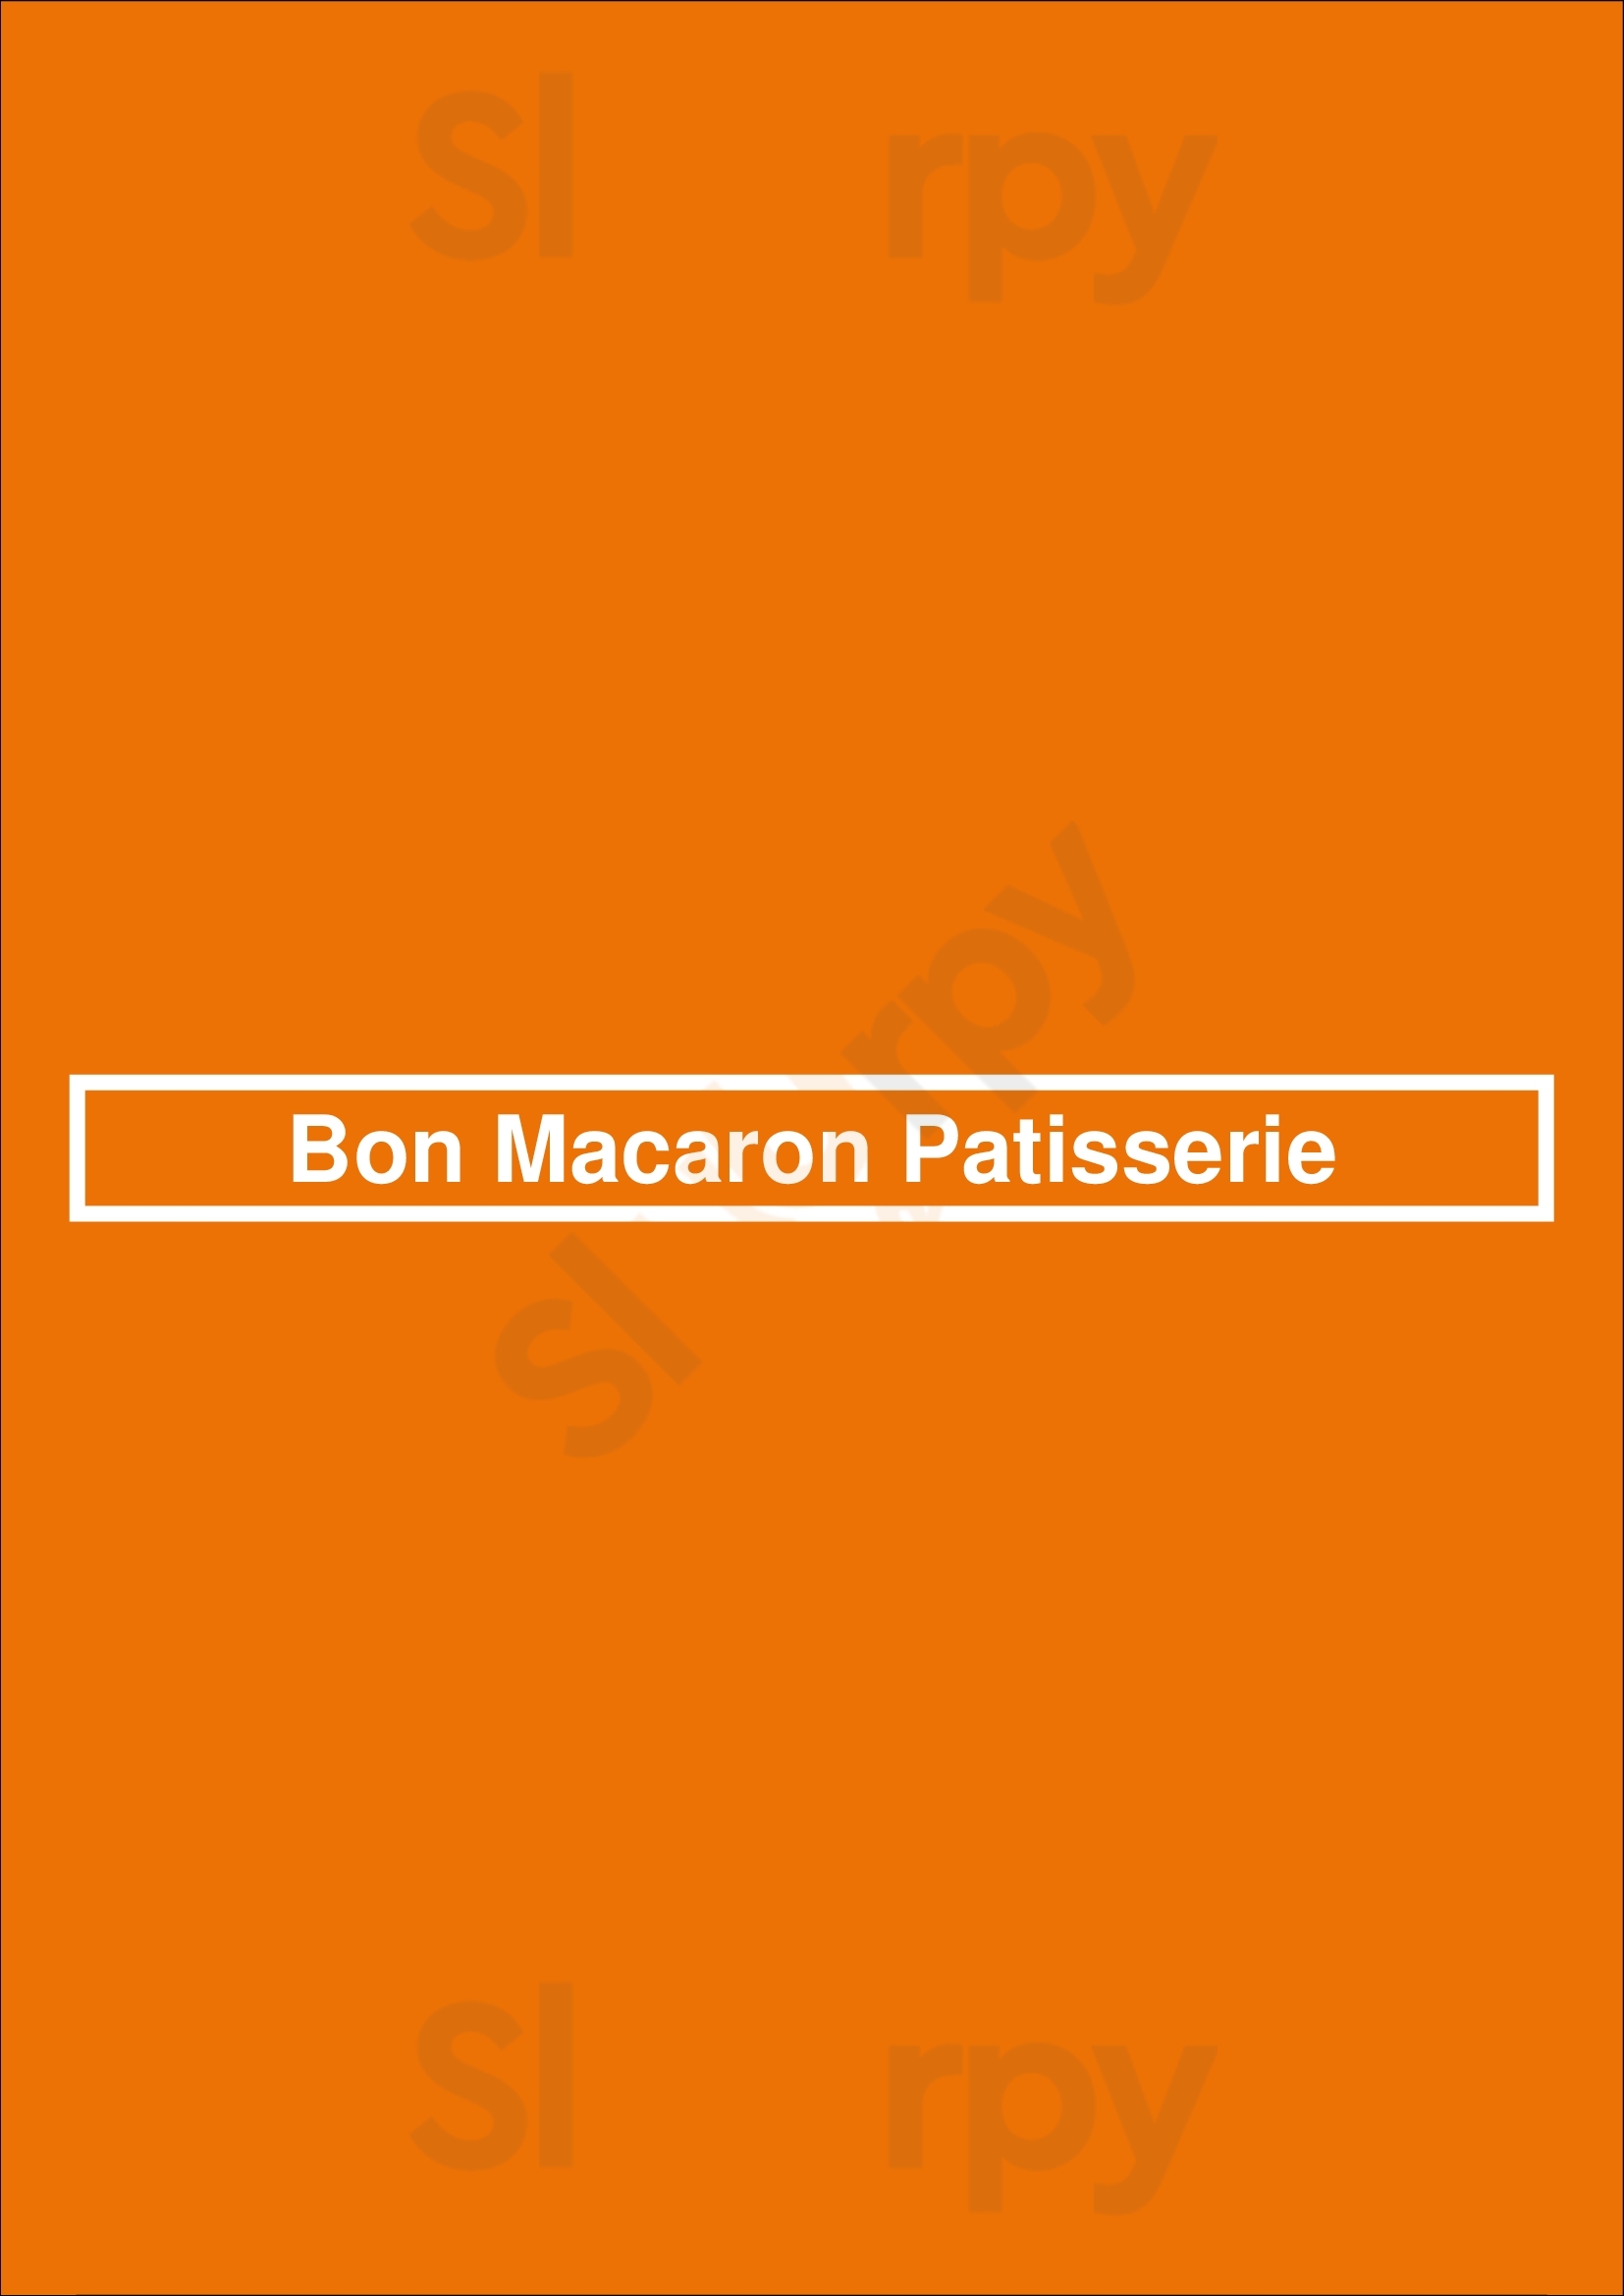 Bon Macaron Patisserie Victoria Menu - 1